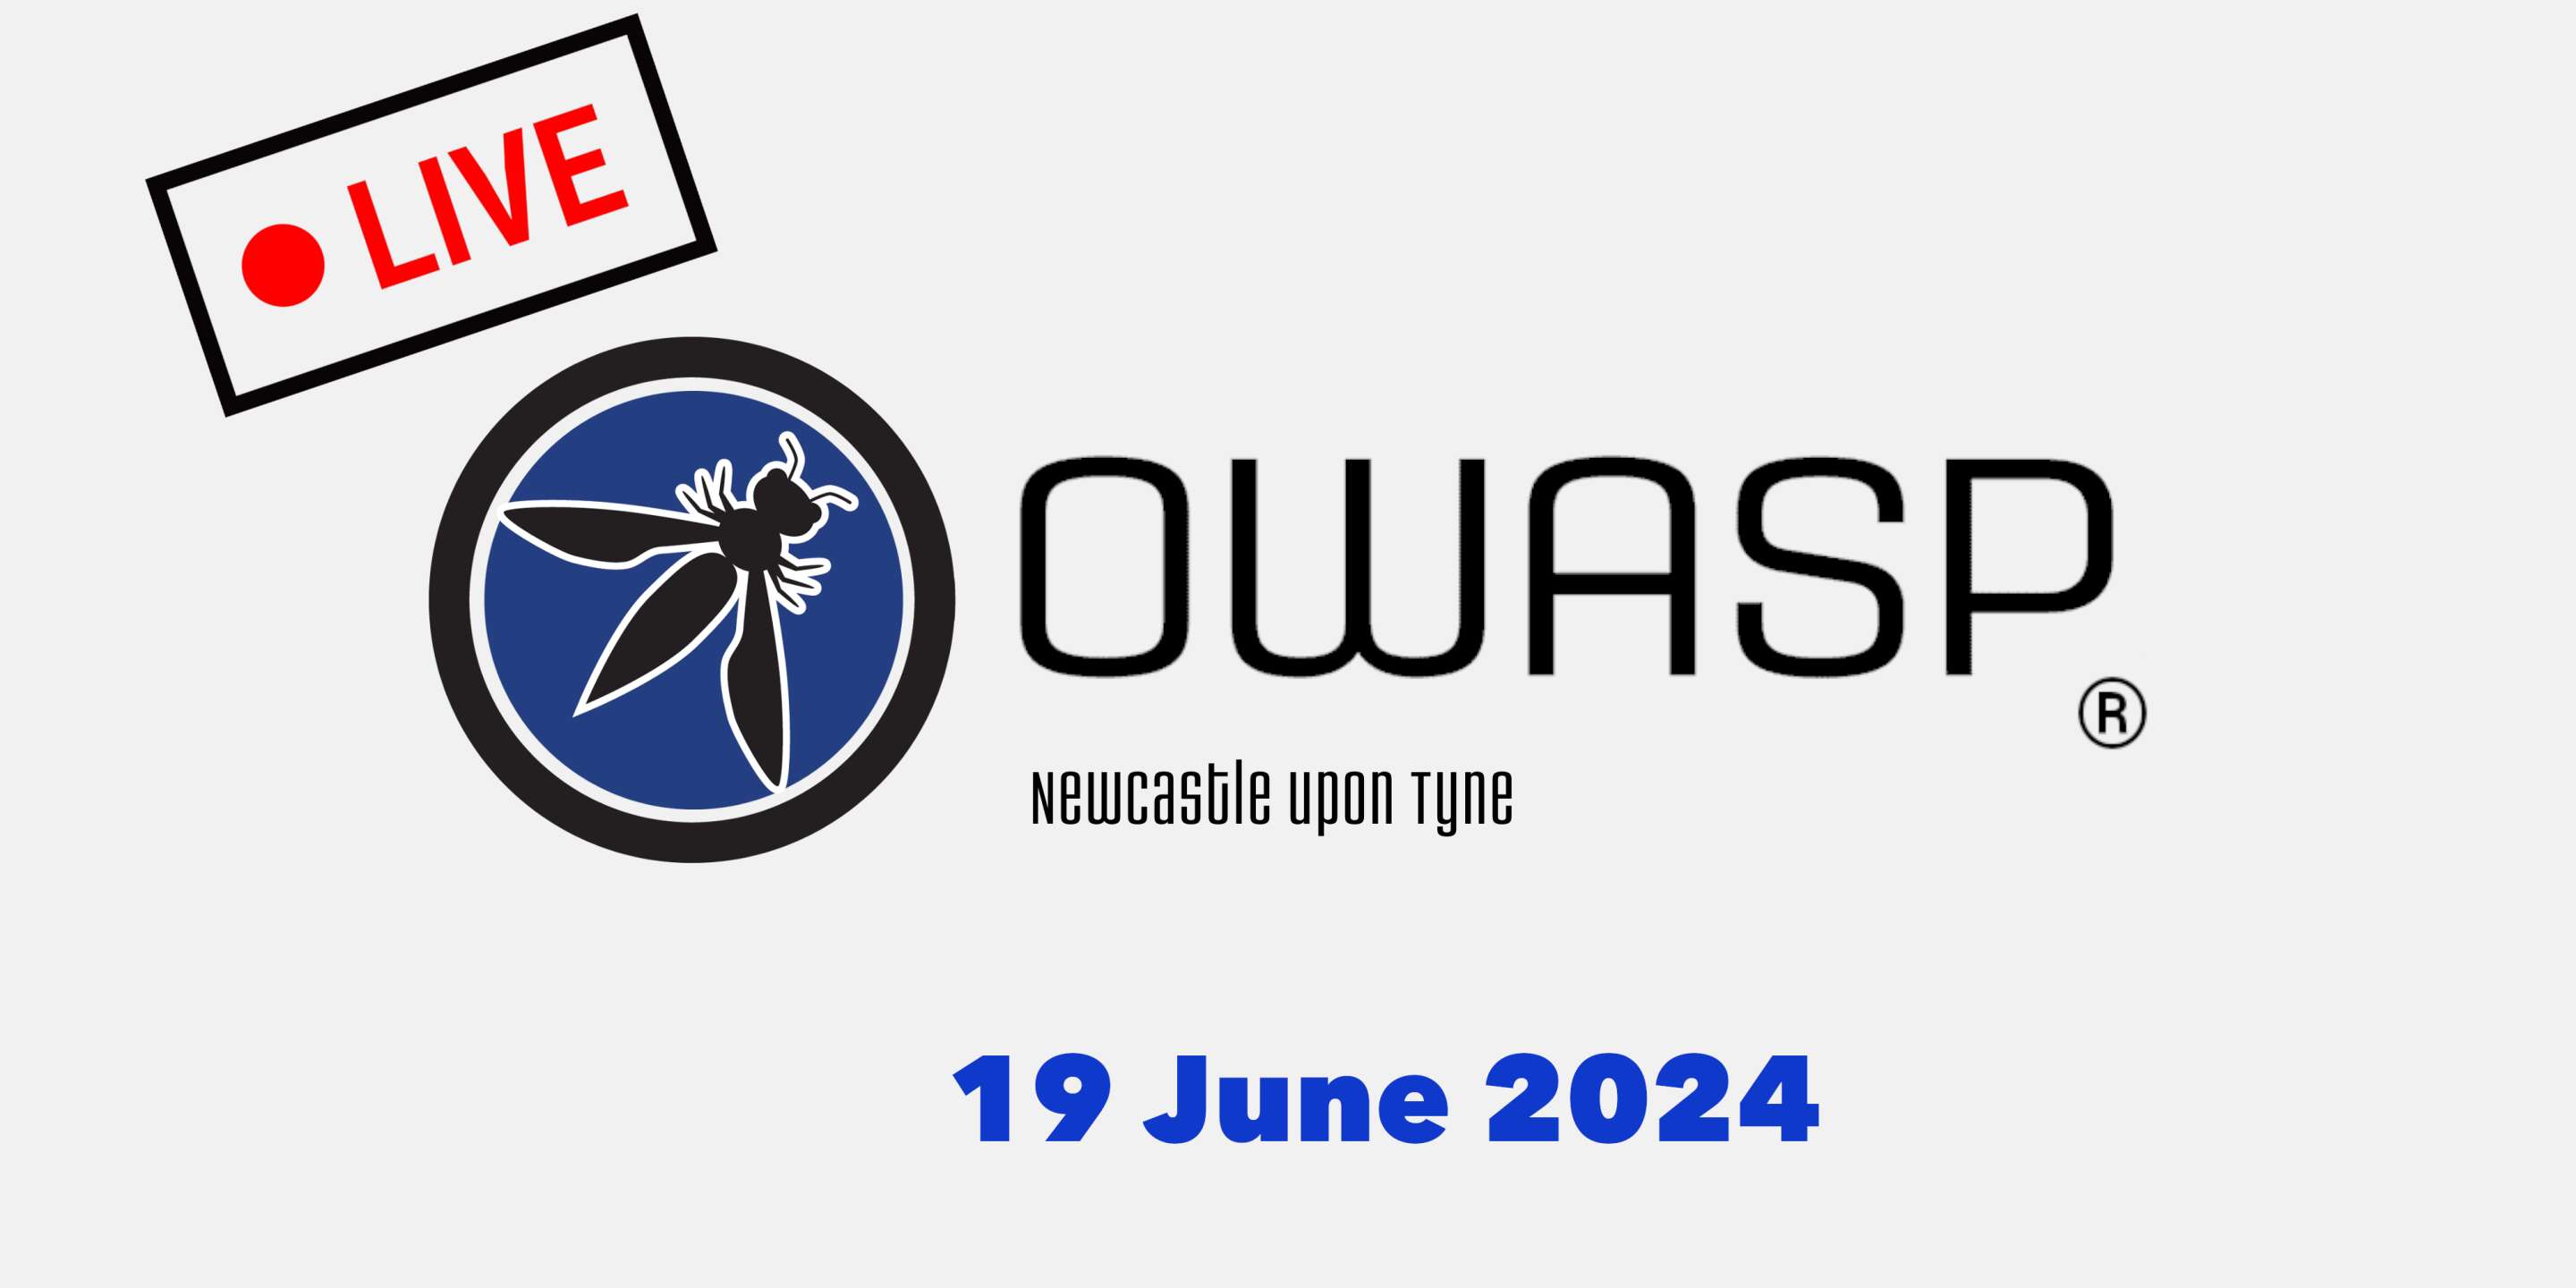 OWASP Newcastle - June 2024